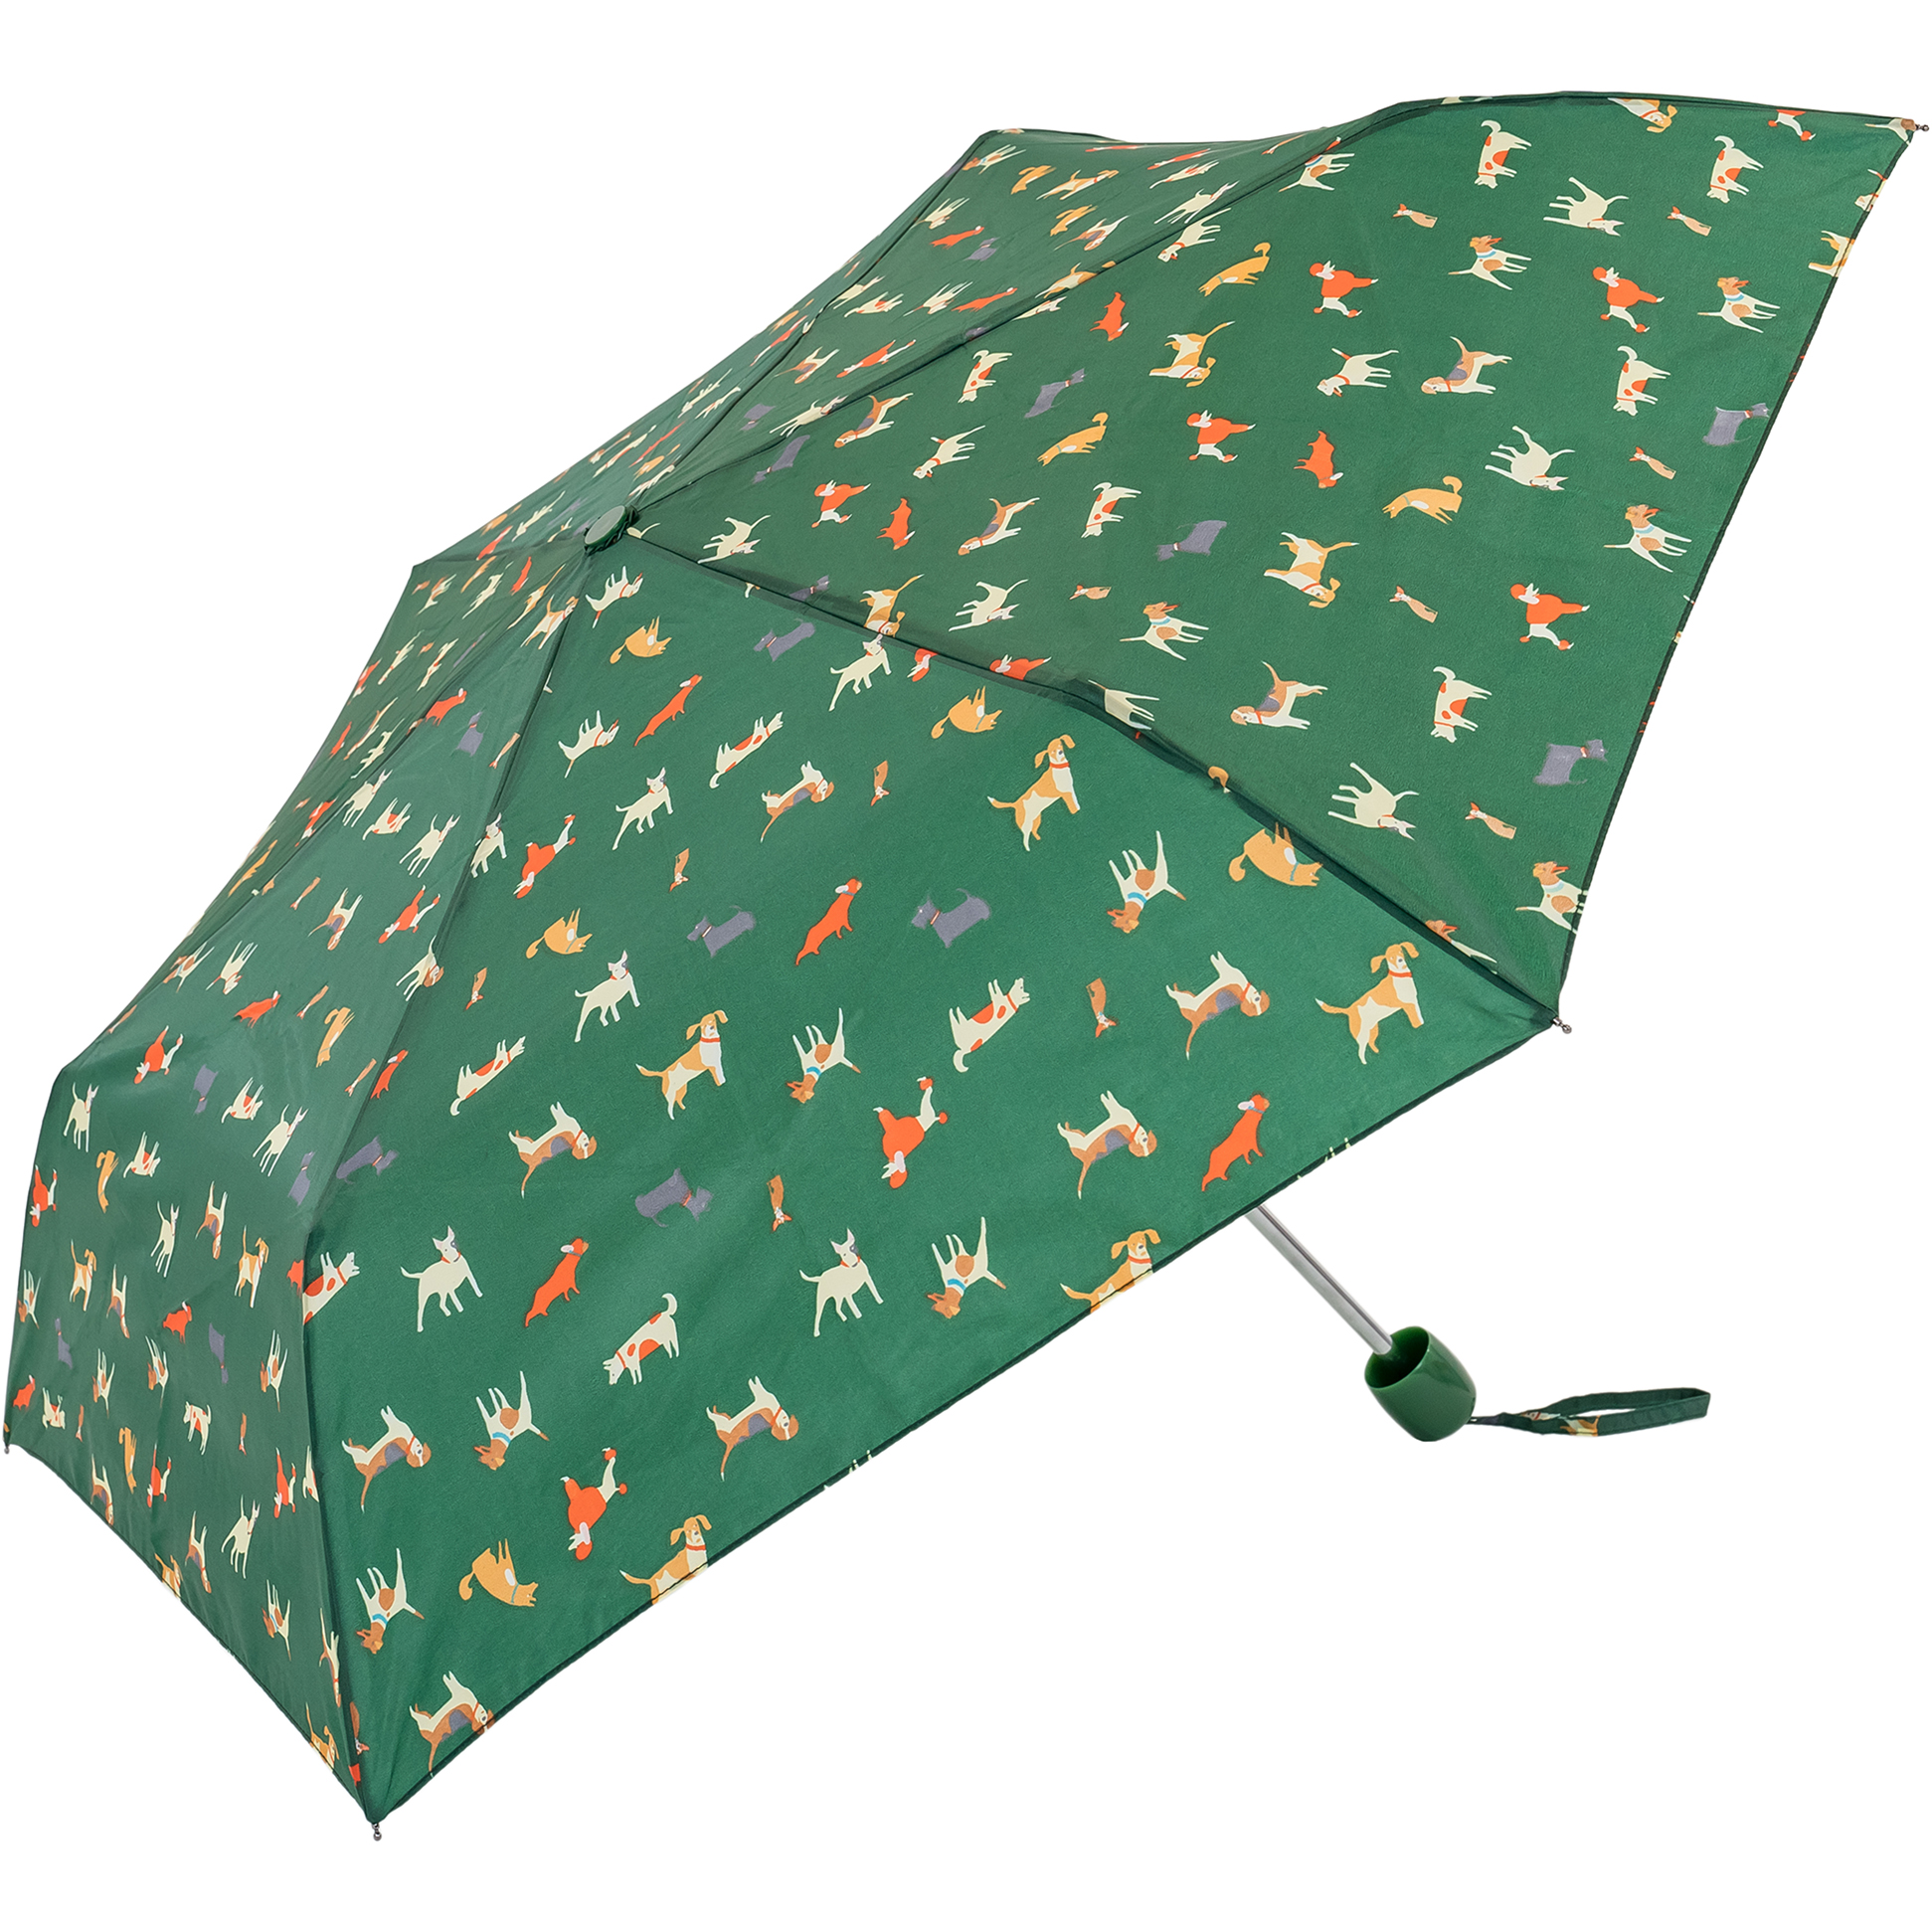 Countryside Dogs Green Compact Umbrella (31104)